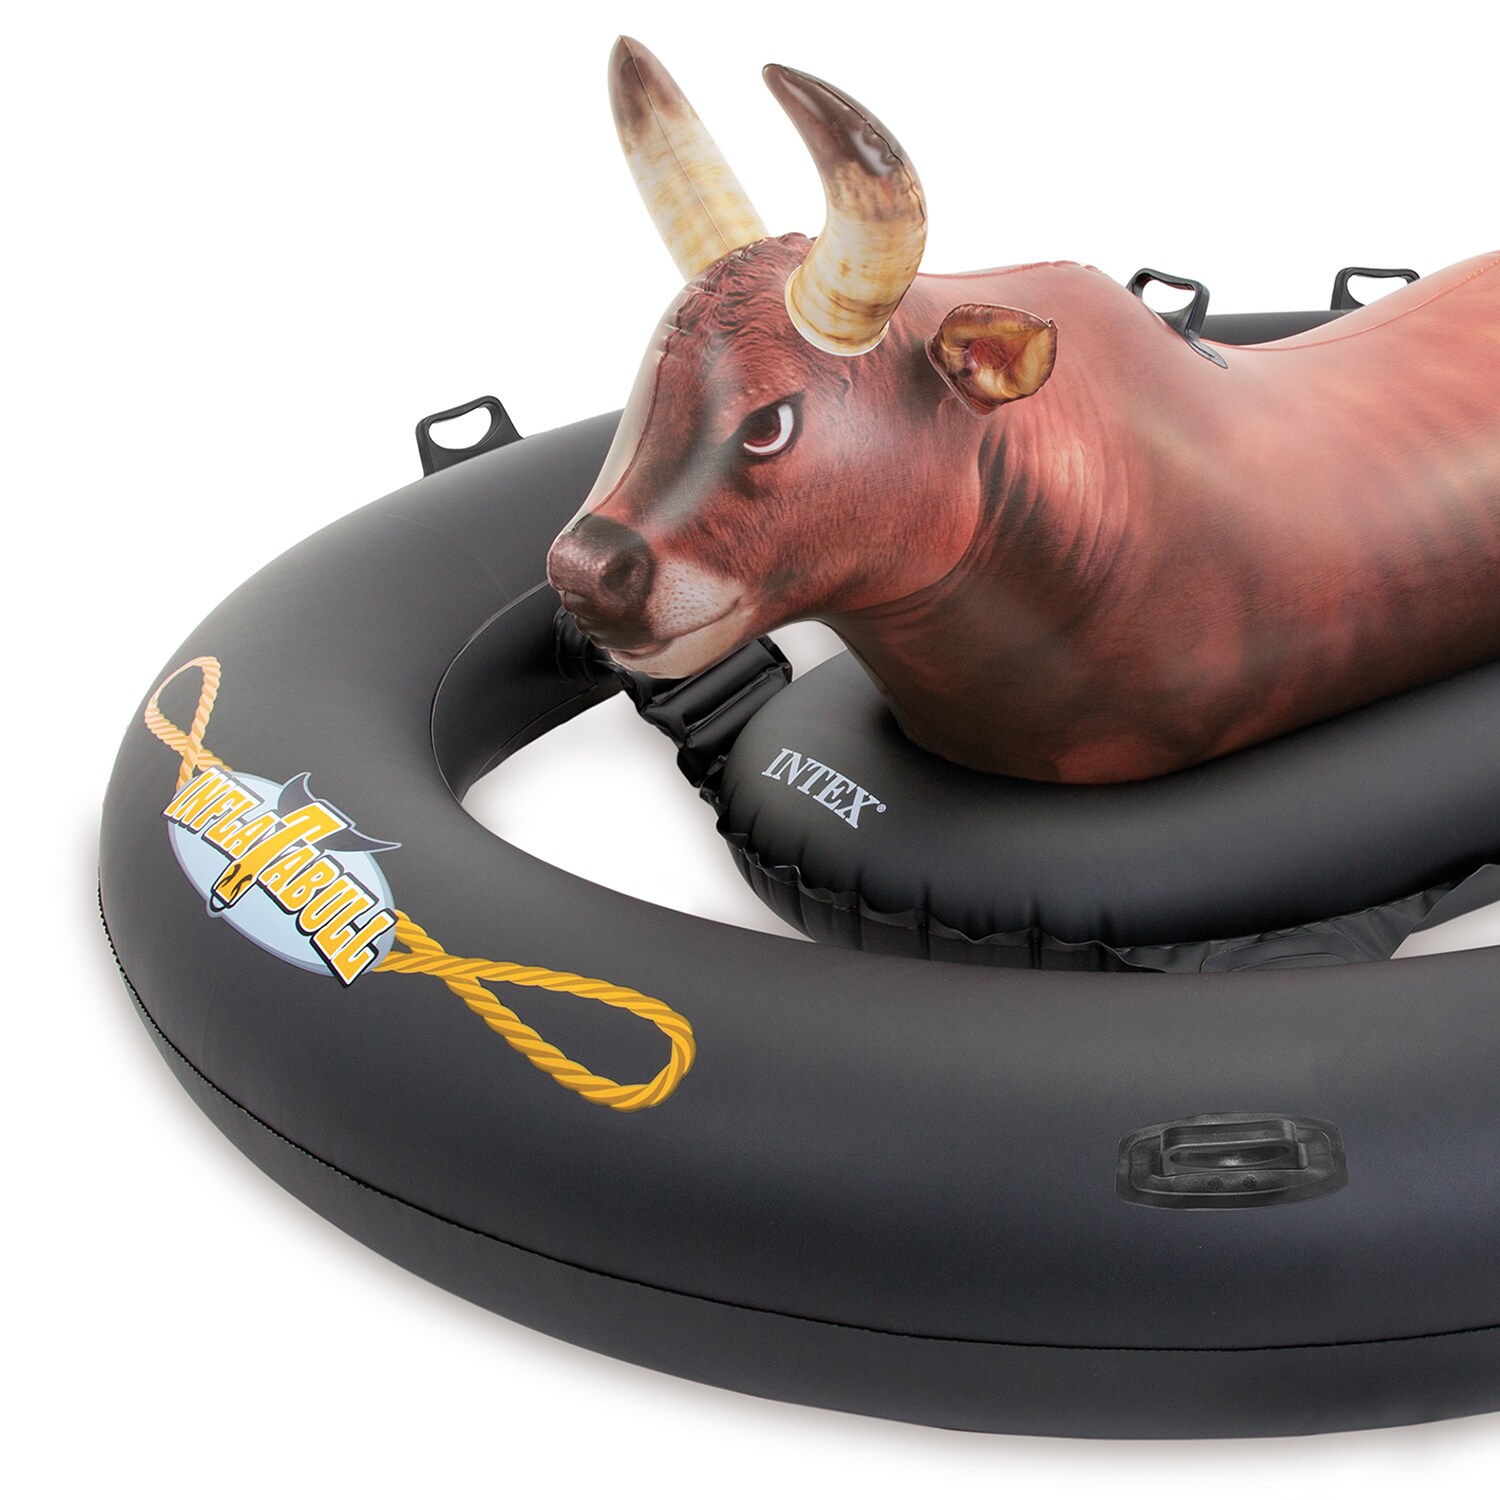 Intex Inflatabull Bull Riding Inflatable Pool Lake Float BIN BRAND NEW! 